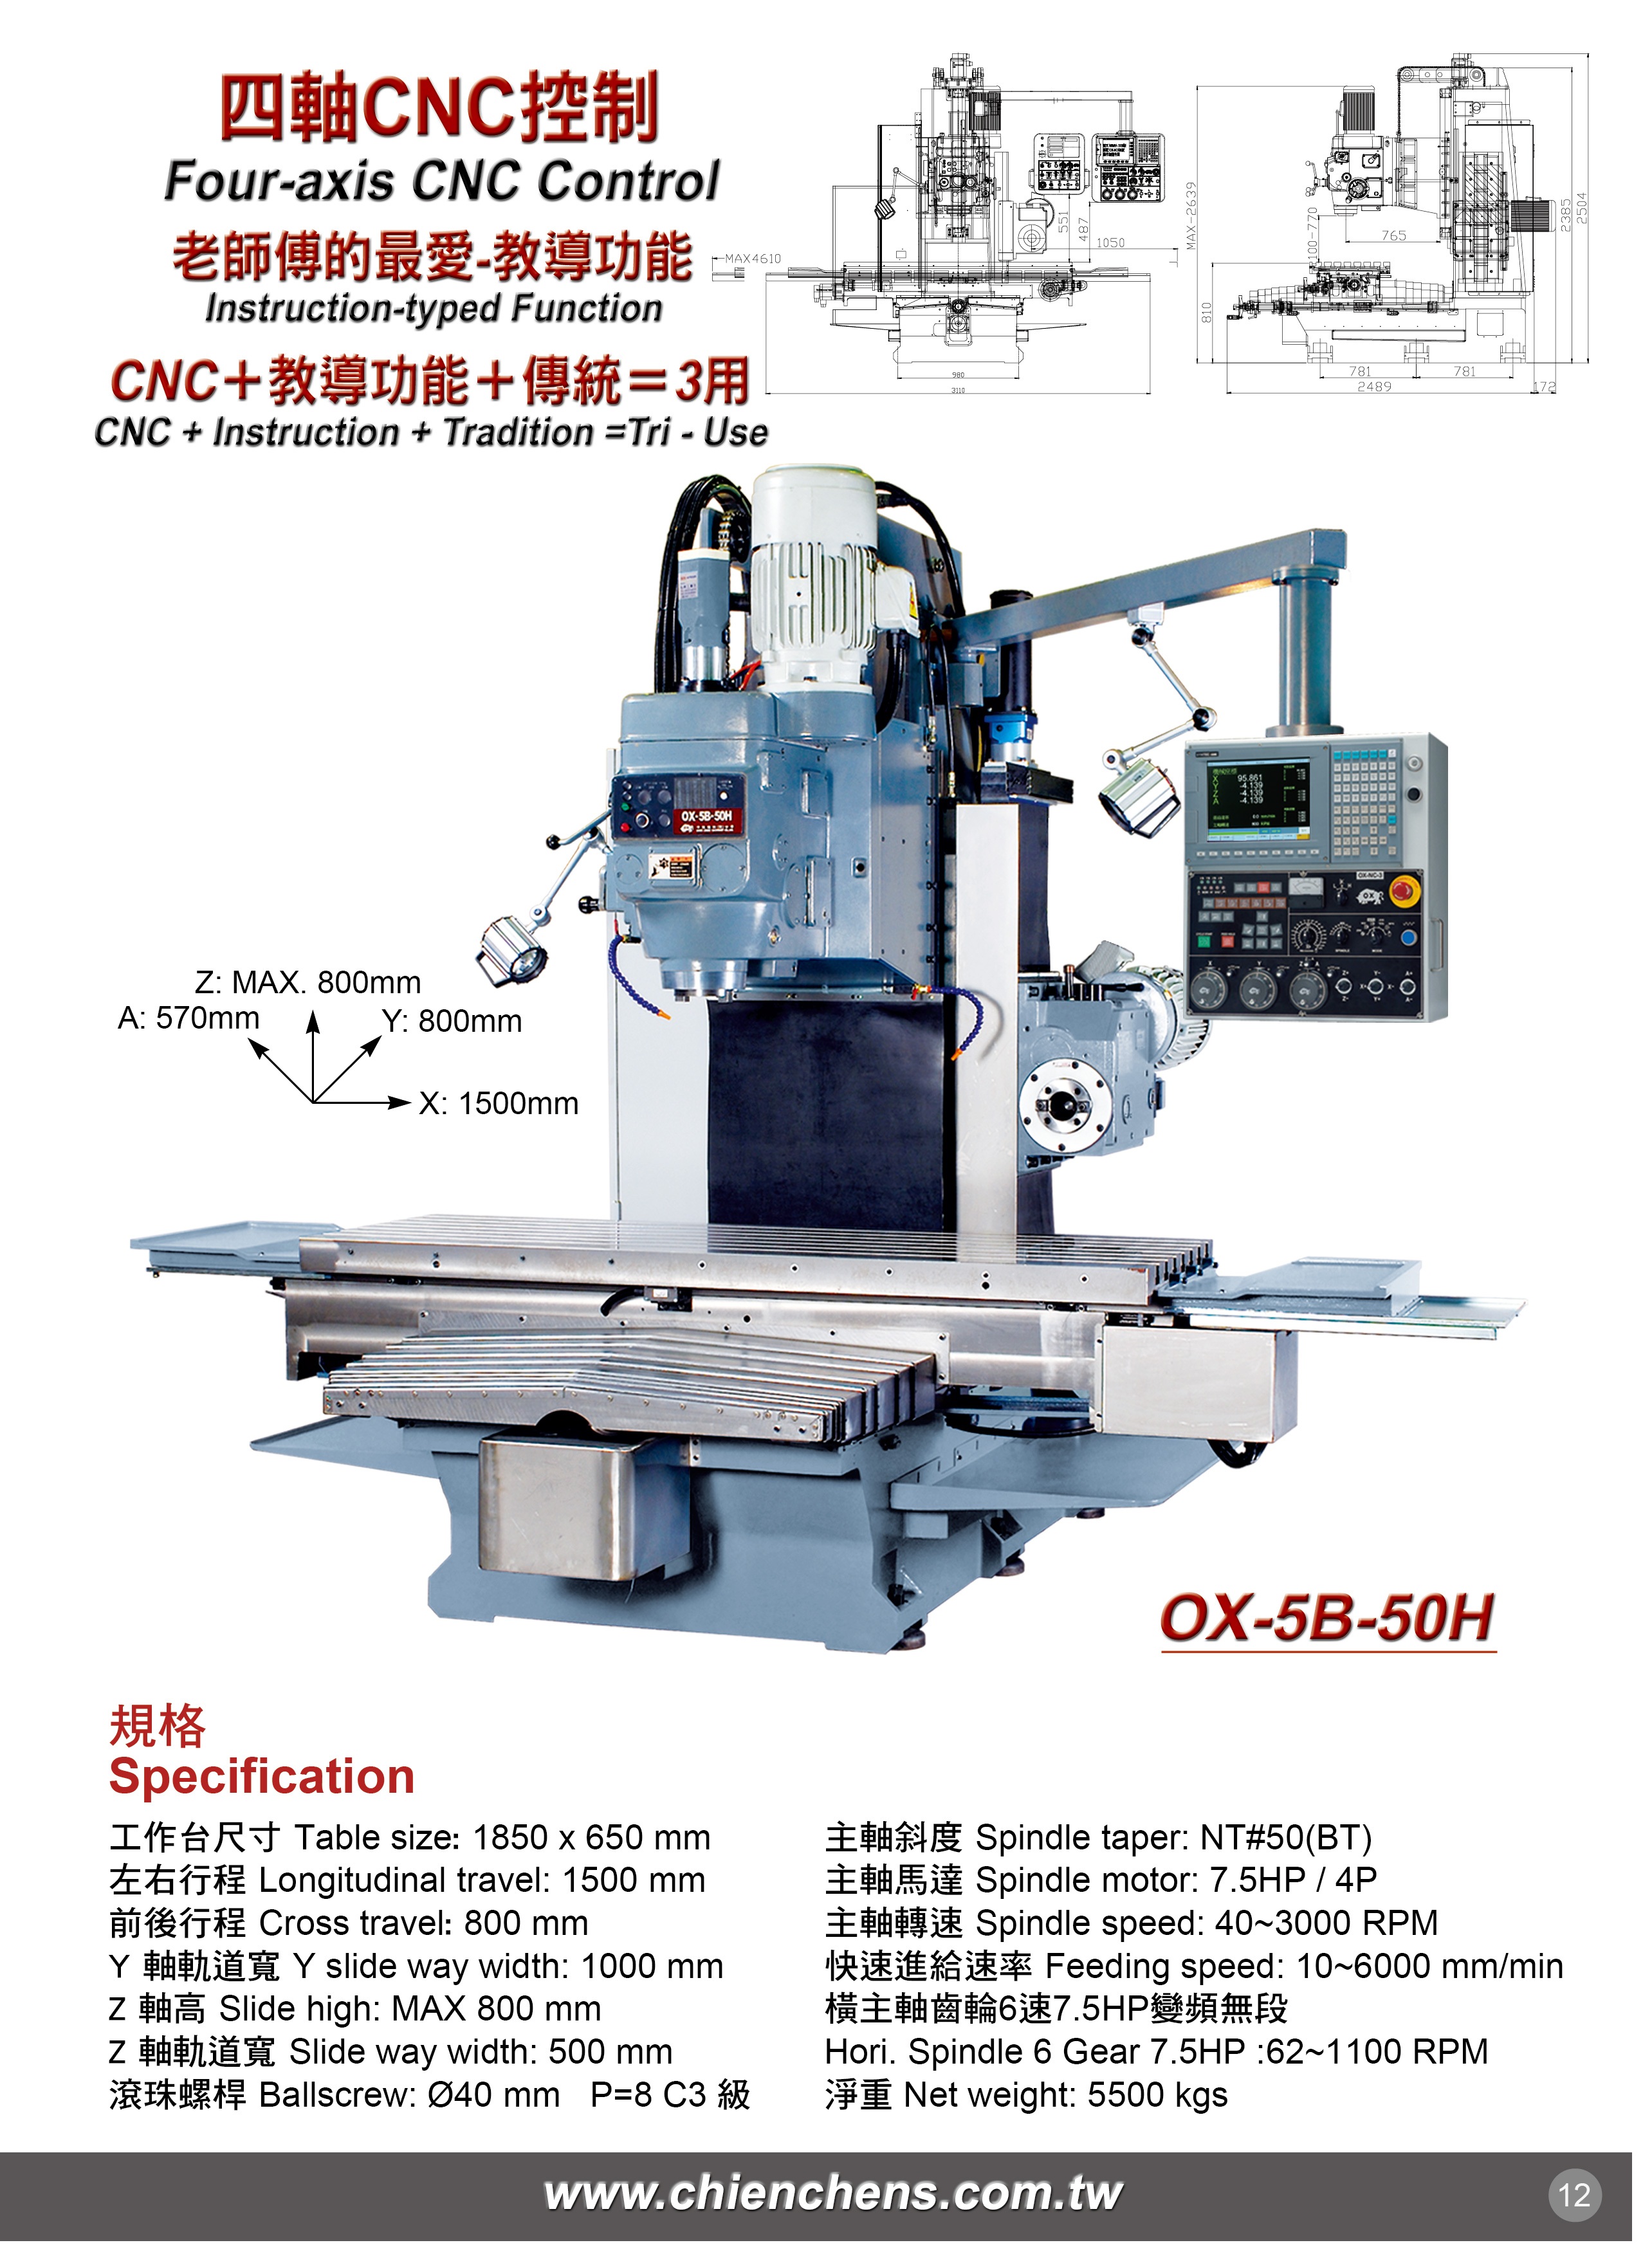 OX-CNC milling machine  OX-5B-50H